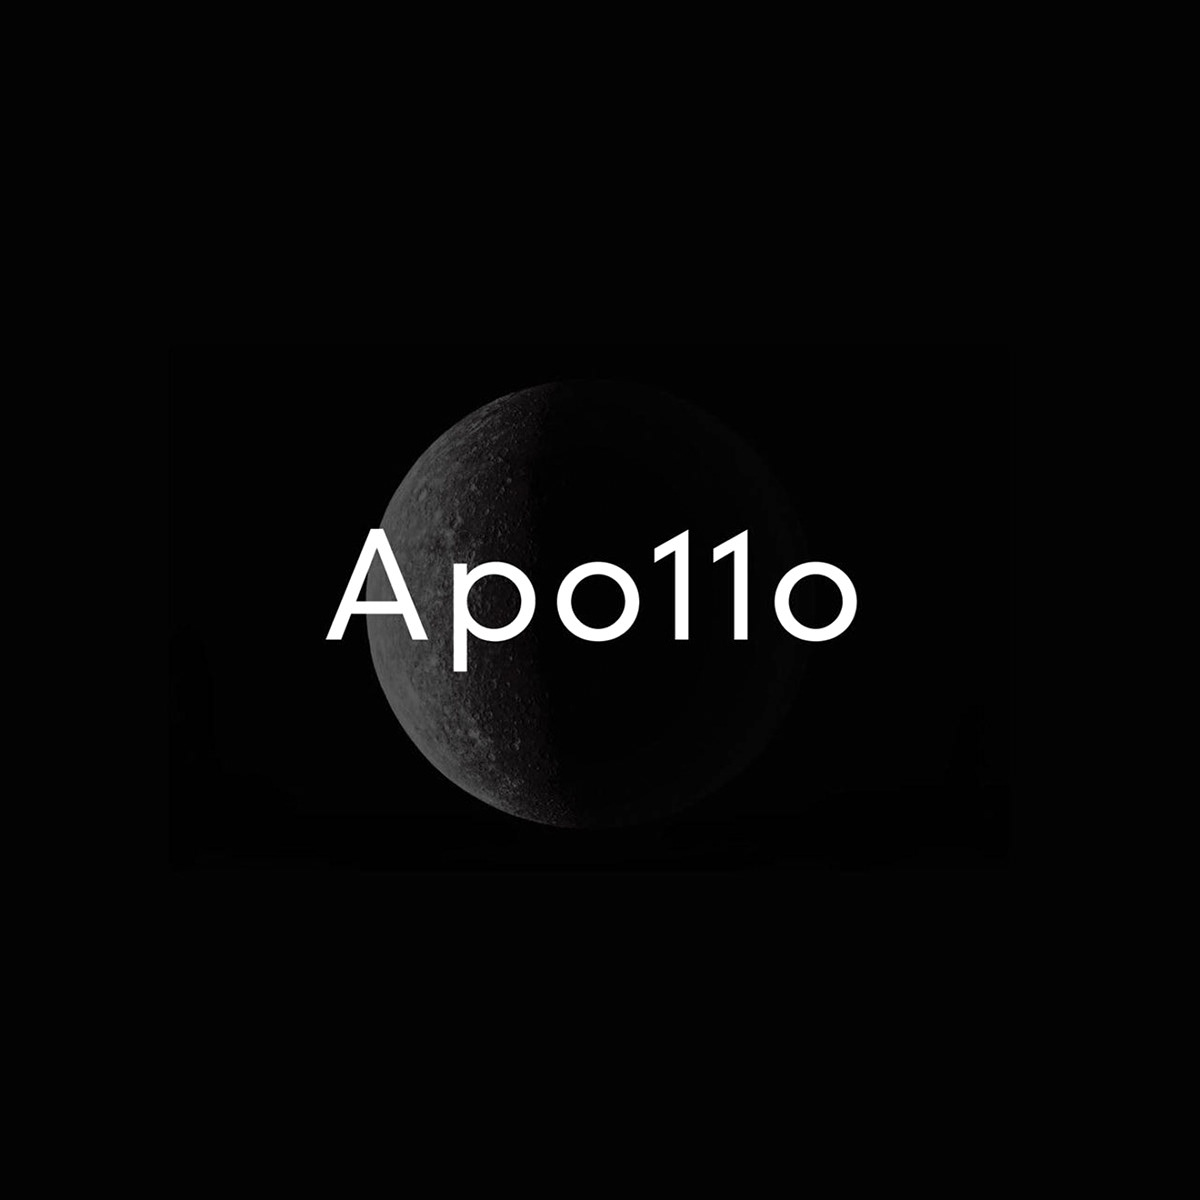 apollo 11 logo nasa 50 years Typographie signature Space  moon